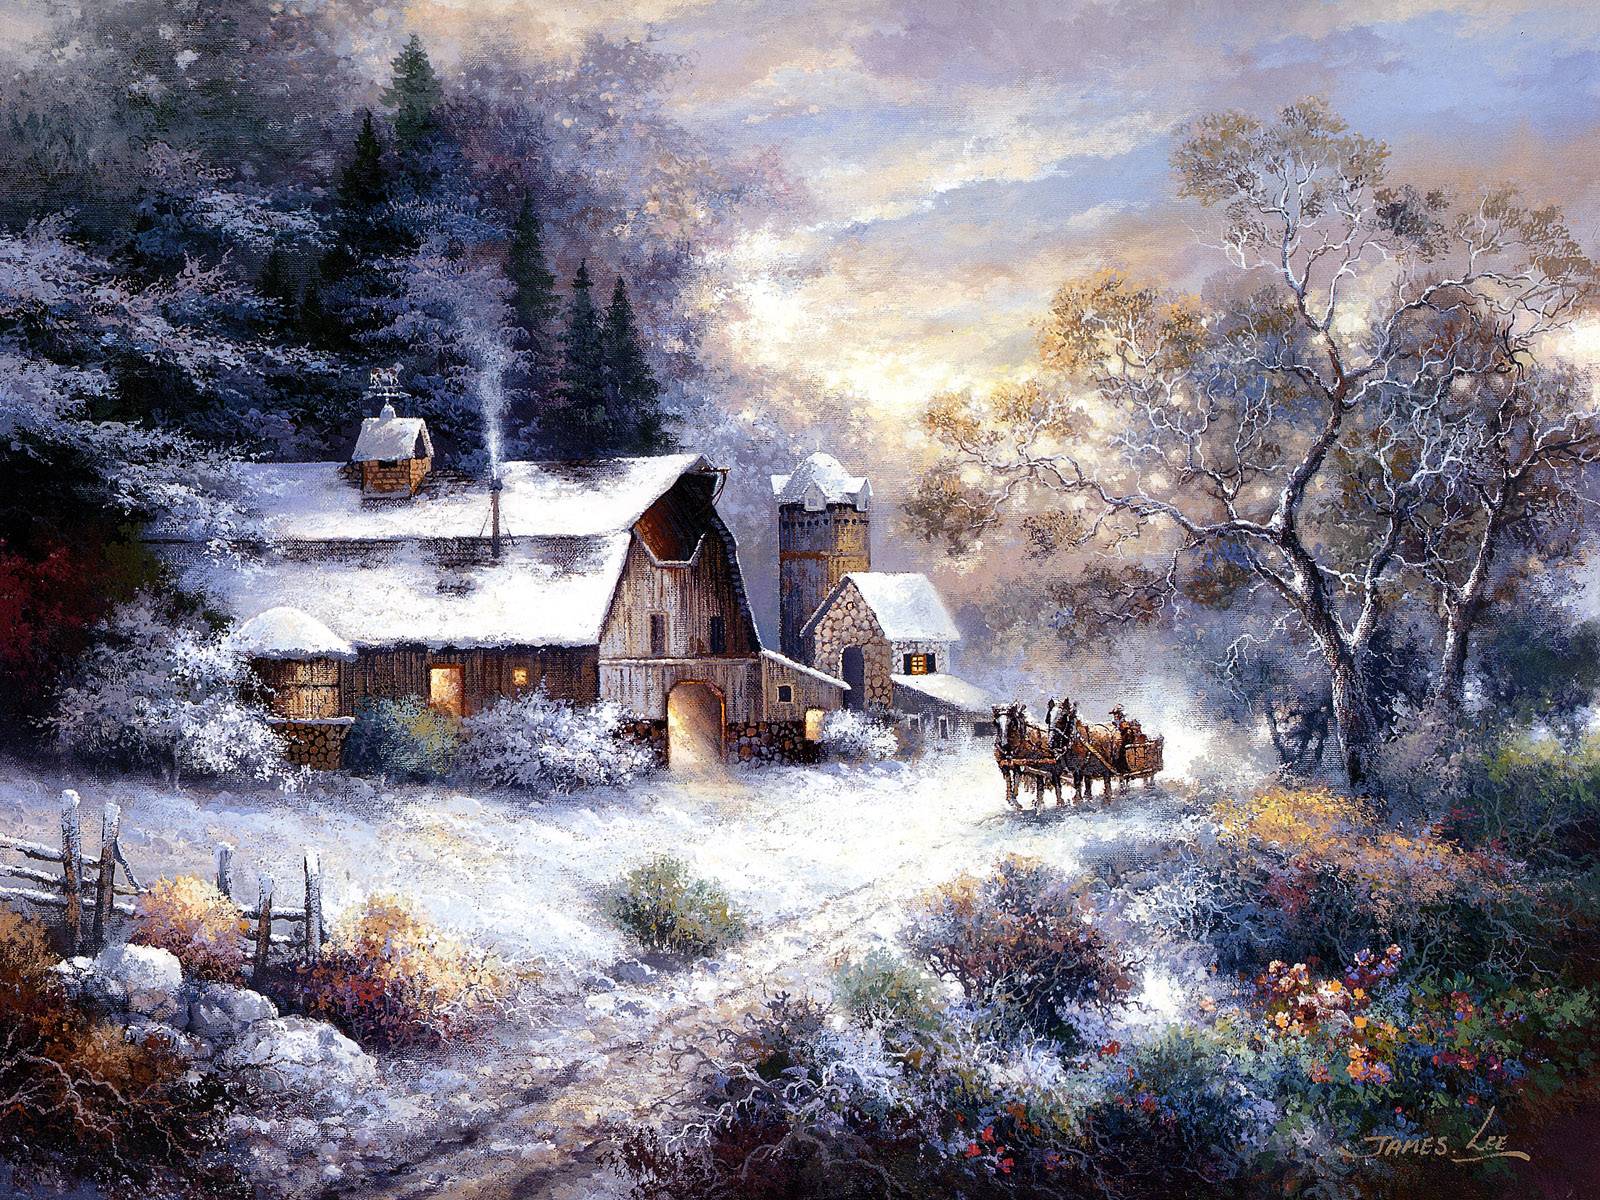 Winter Country Scenes Wallpaper